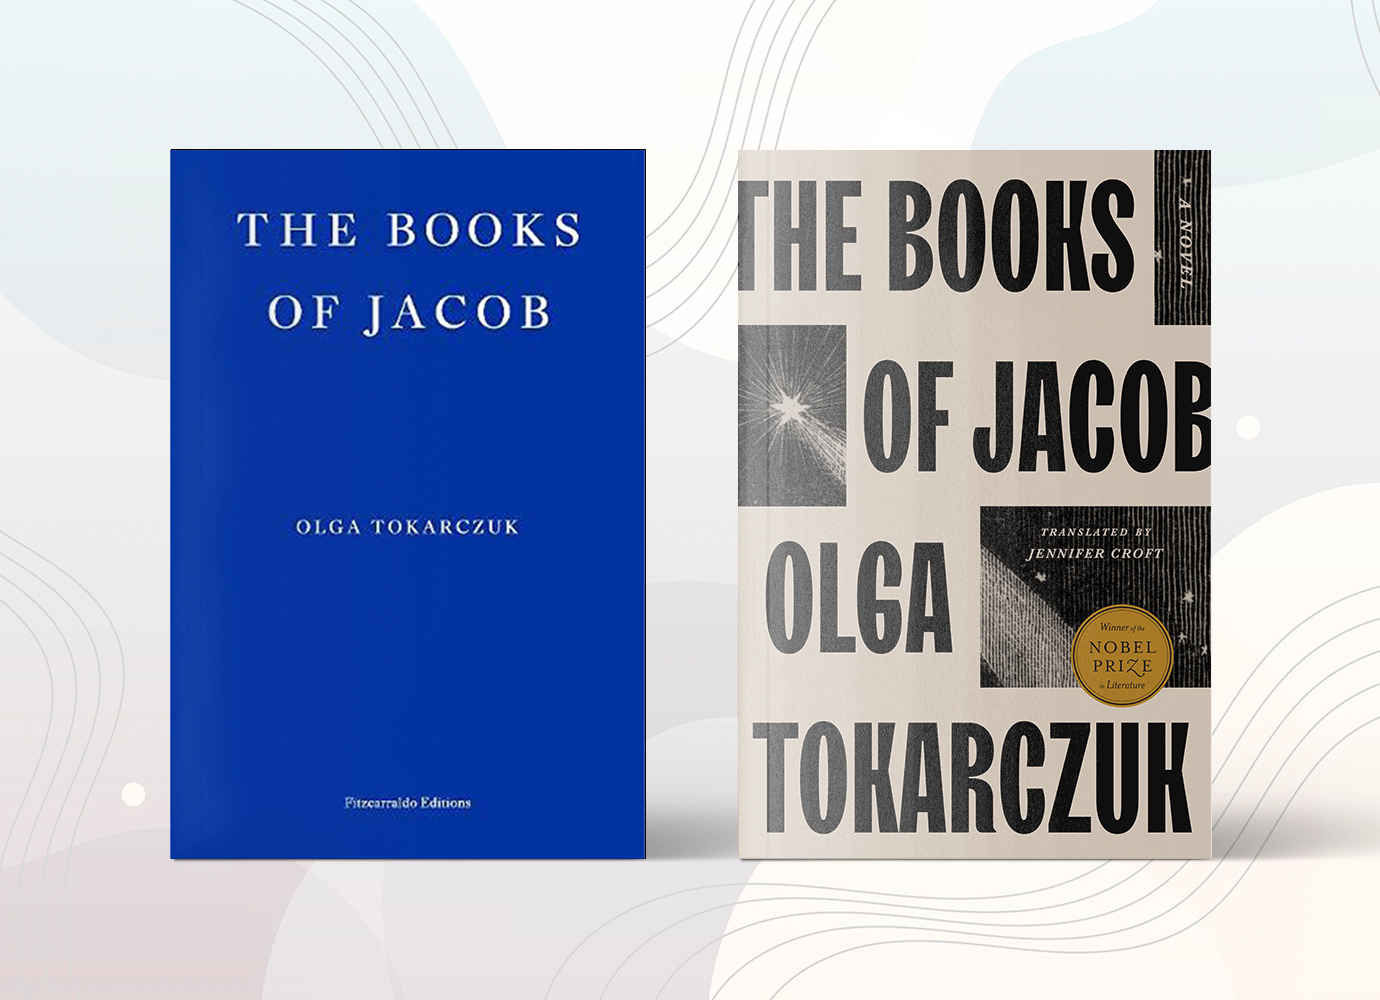 The Books of Jacob by Olga Tokarczuk — ambitious, daring, encyclopaedic